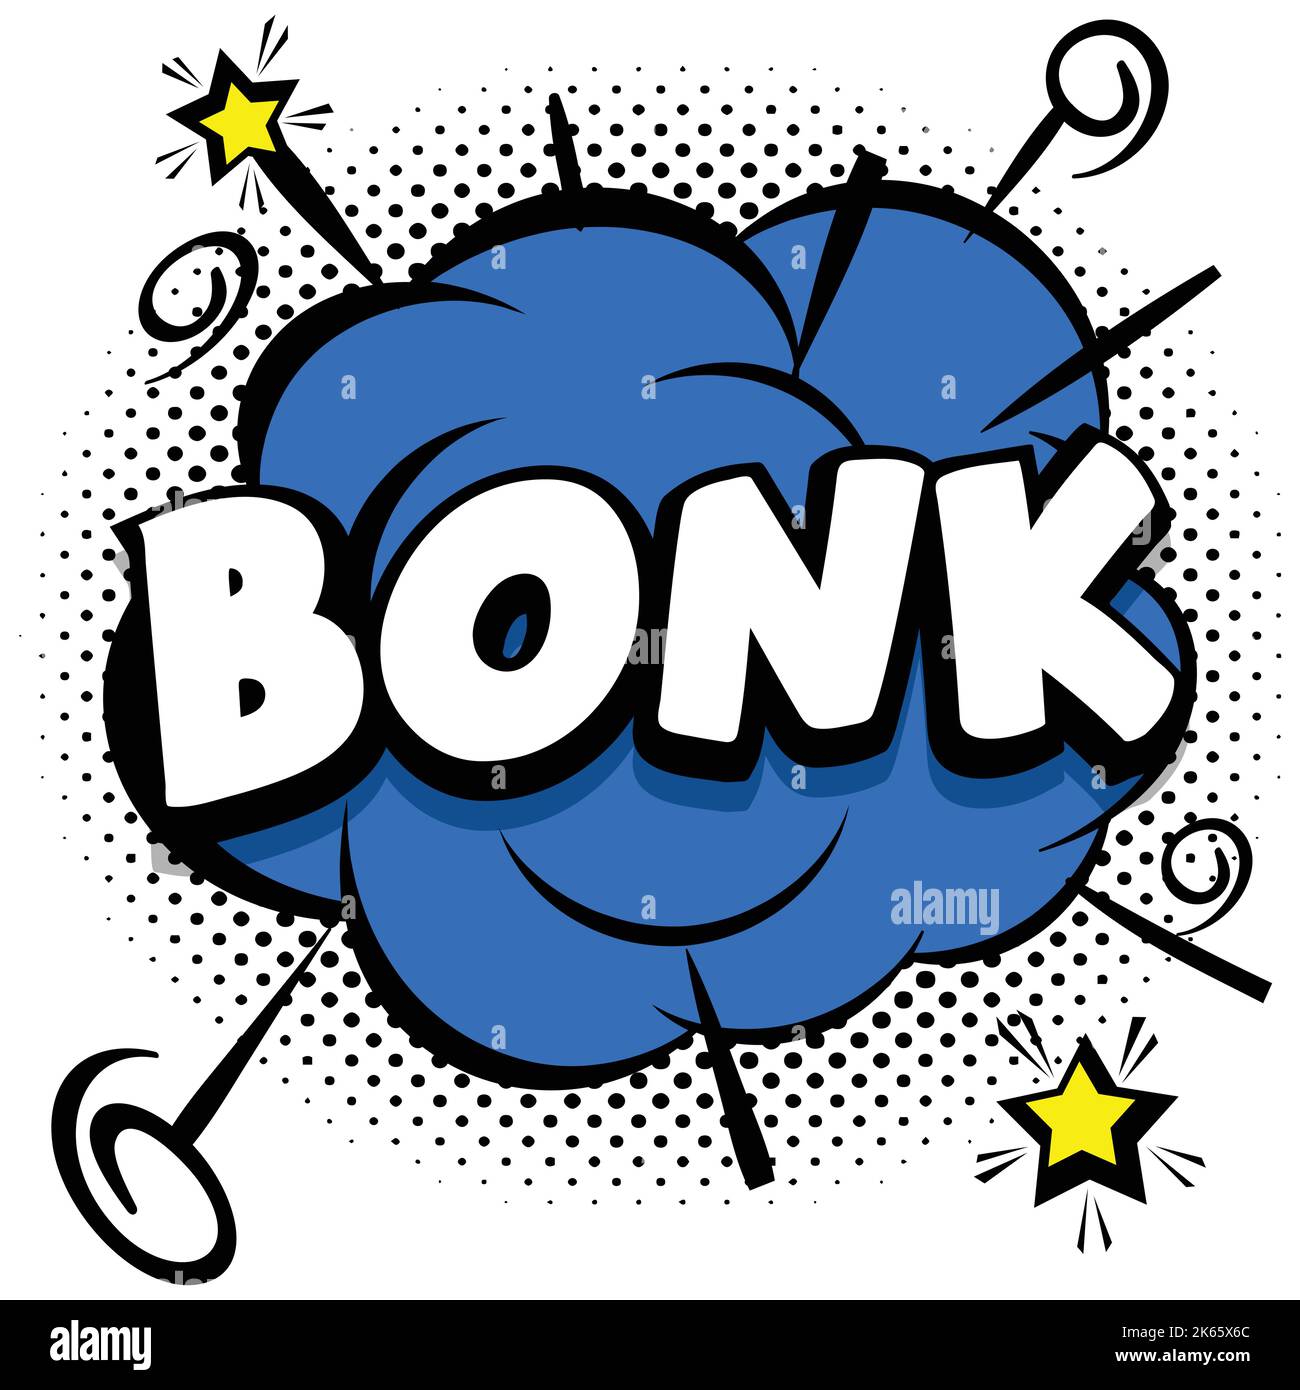 Bonk - Gallery